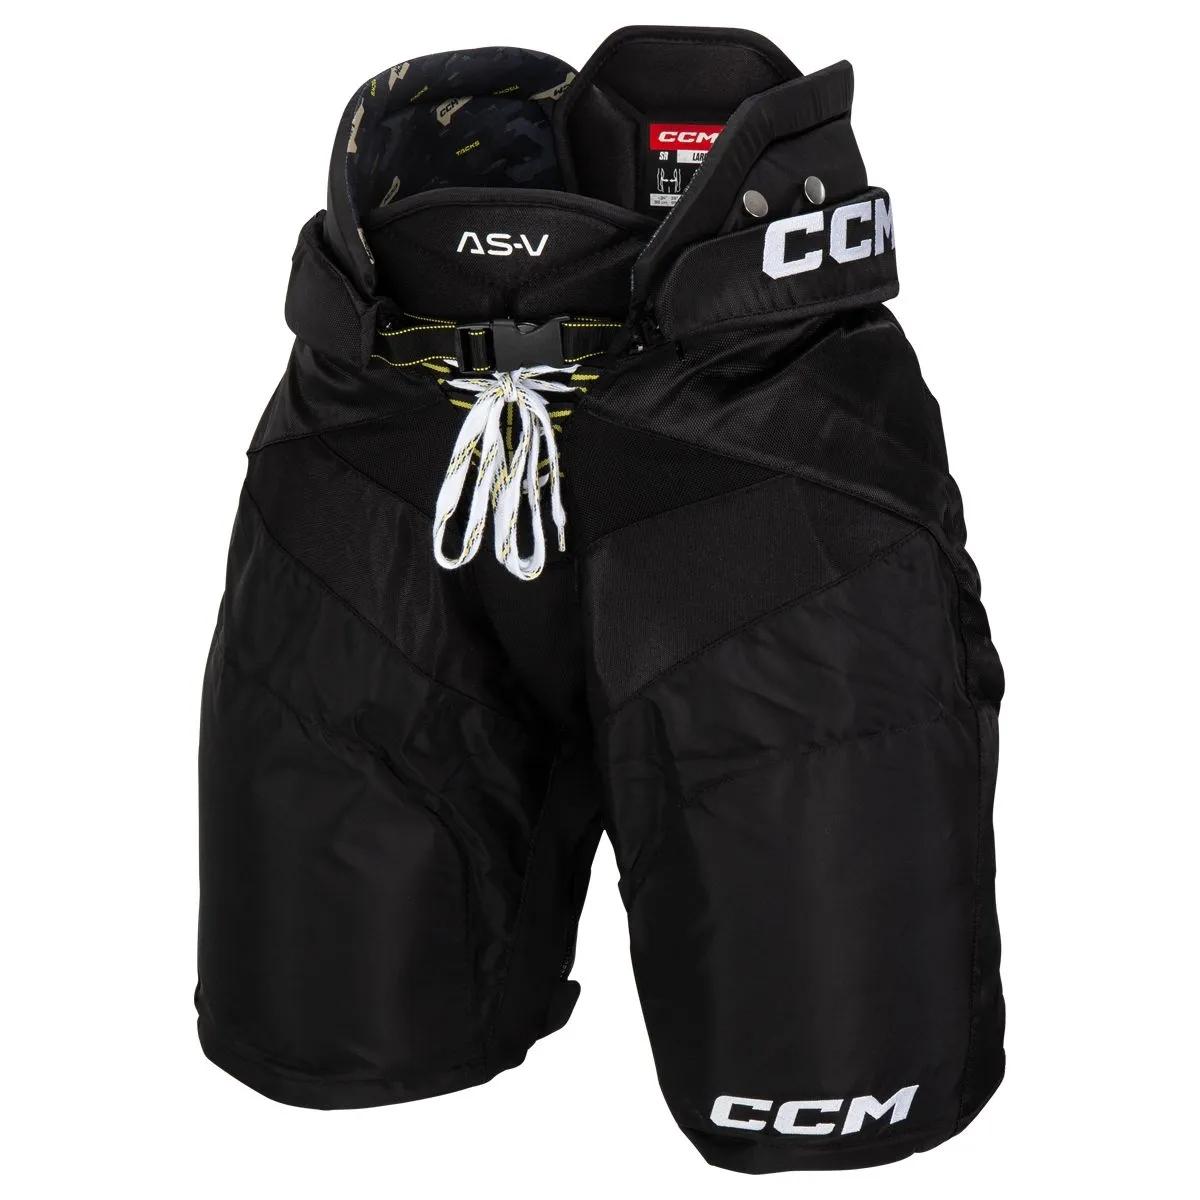 CCM Tacks AS-V Jr. Hockey Pantsproduct zoom image #1